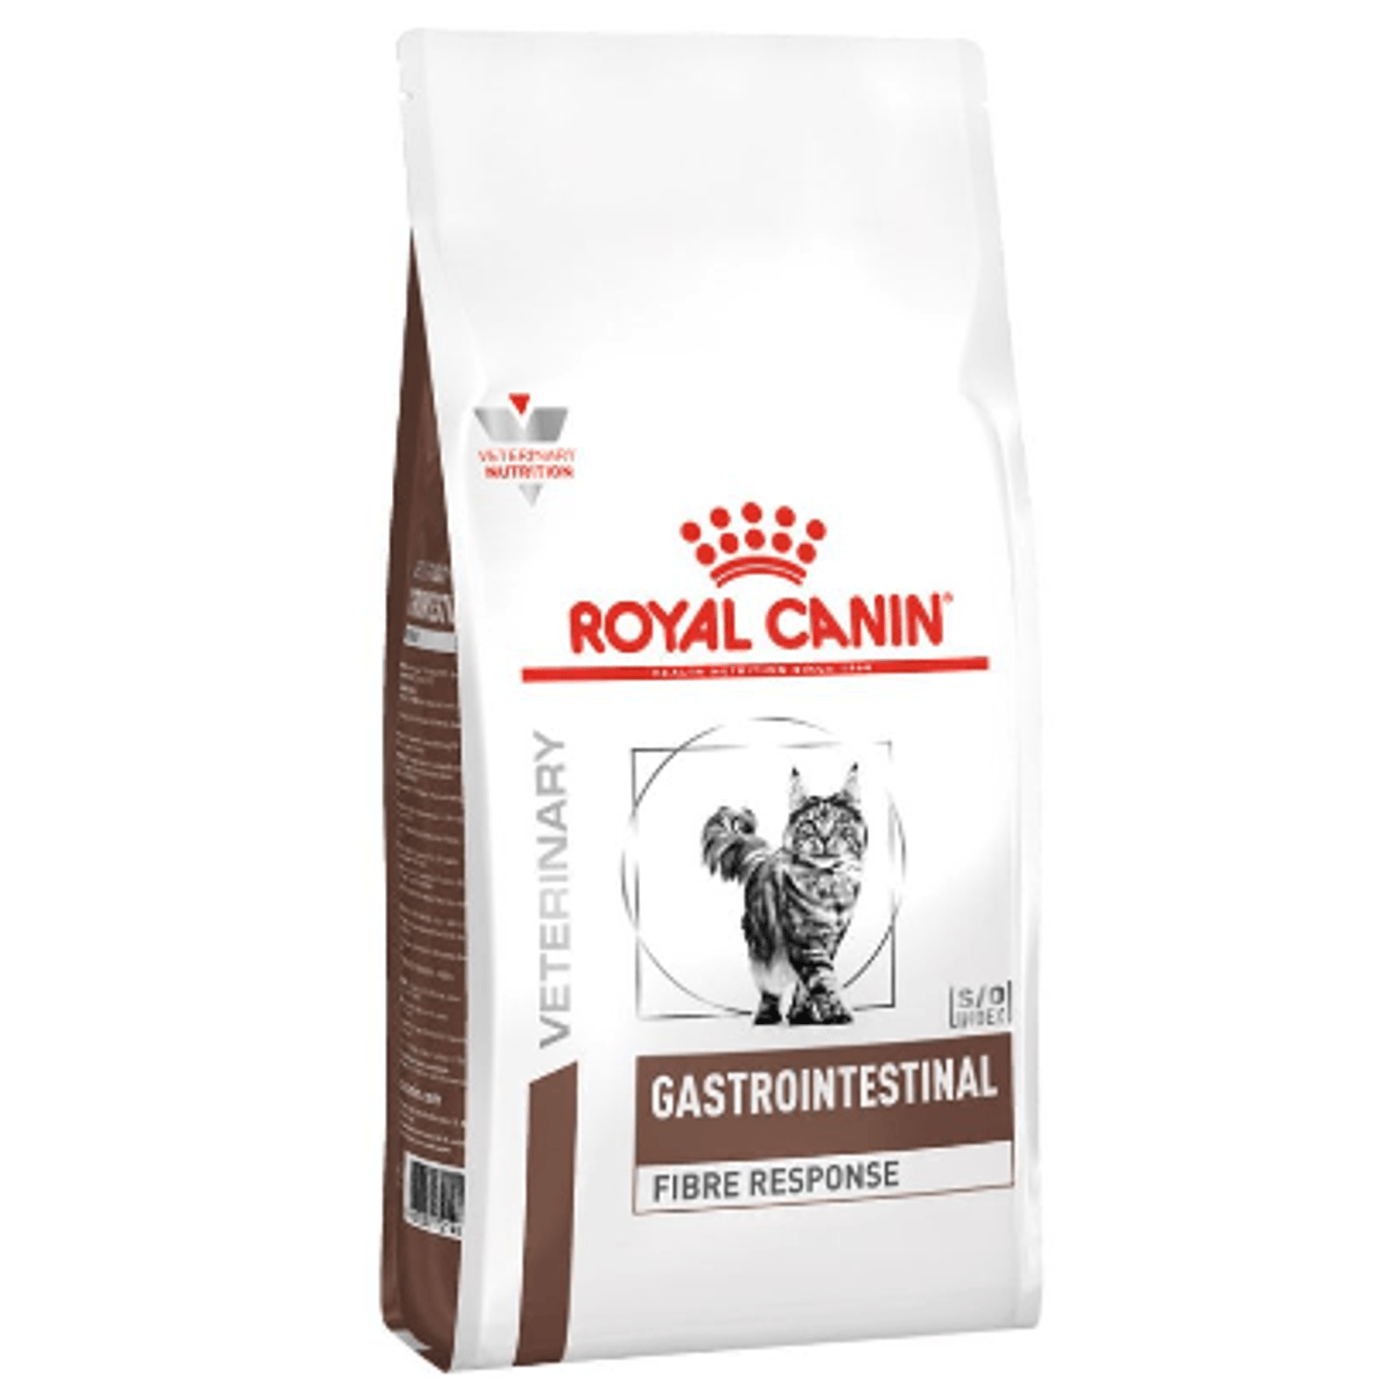 Royal_Canin_Gastrointestinal_Fibre_Response_Feline